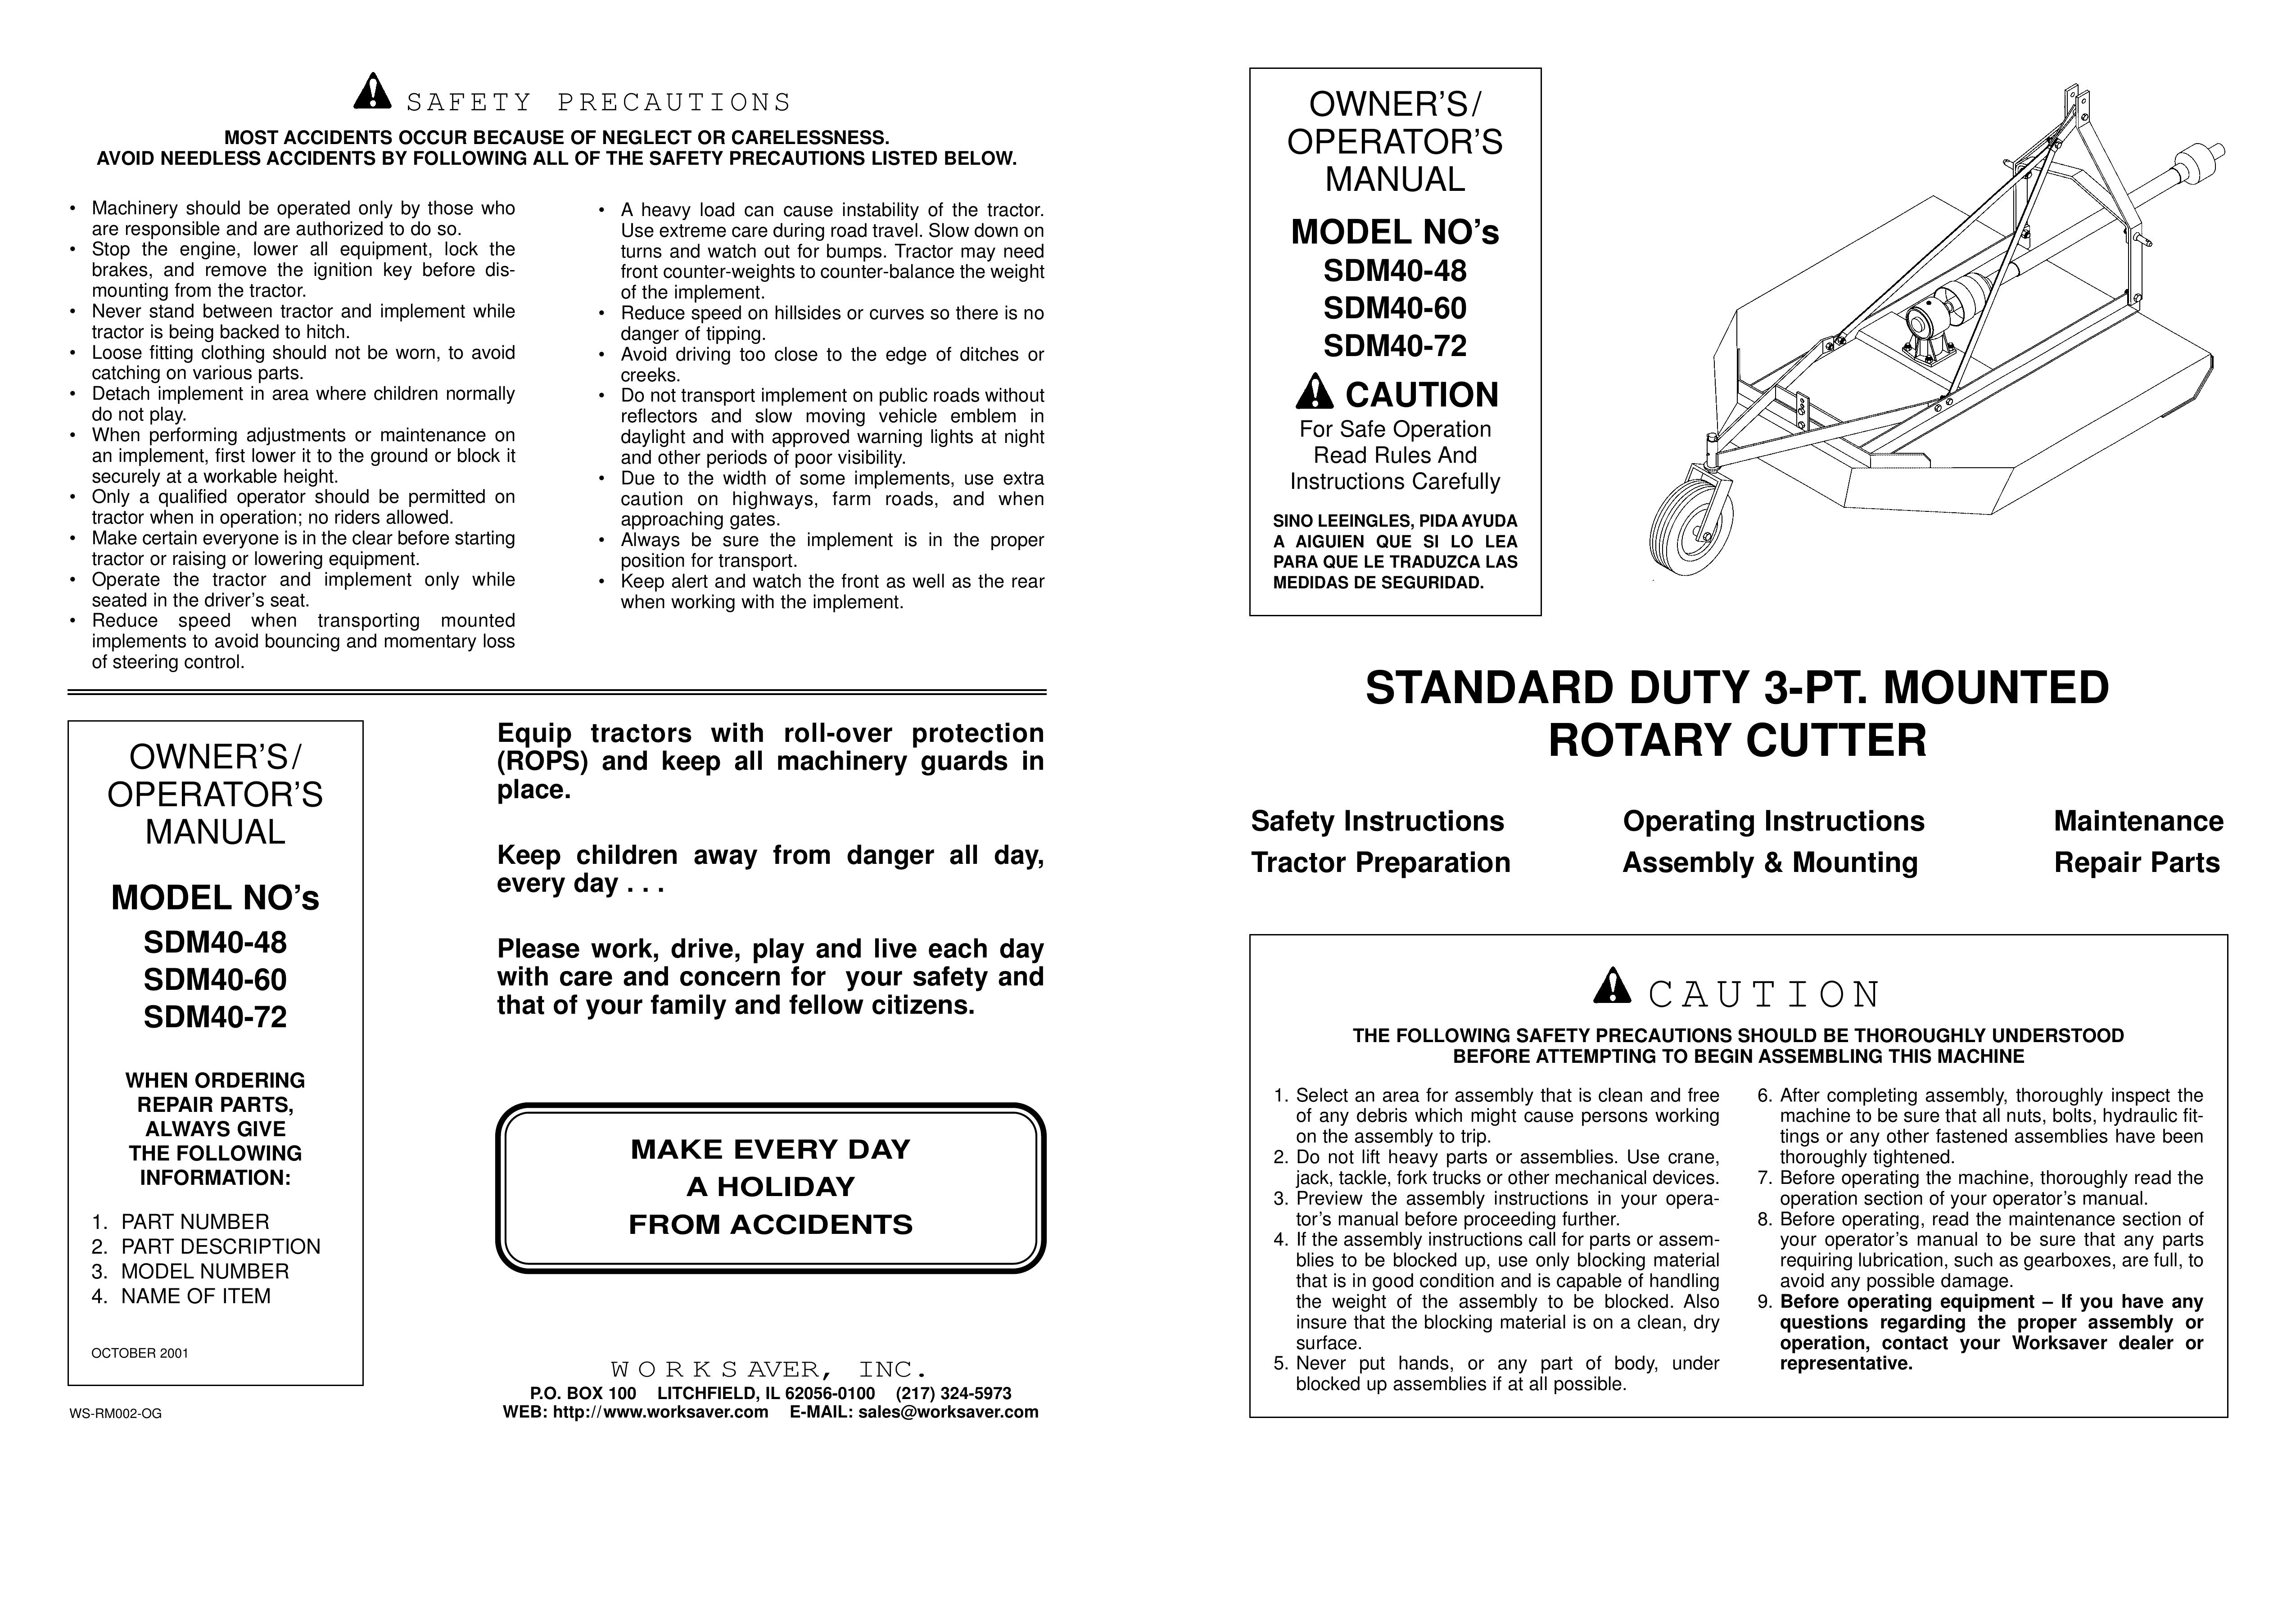 Worksaver SDM40-48 Brush Cutter User Manual